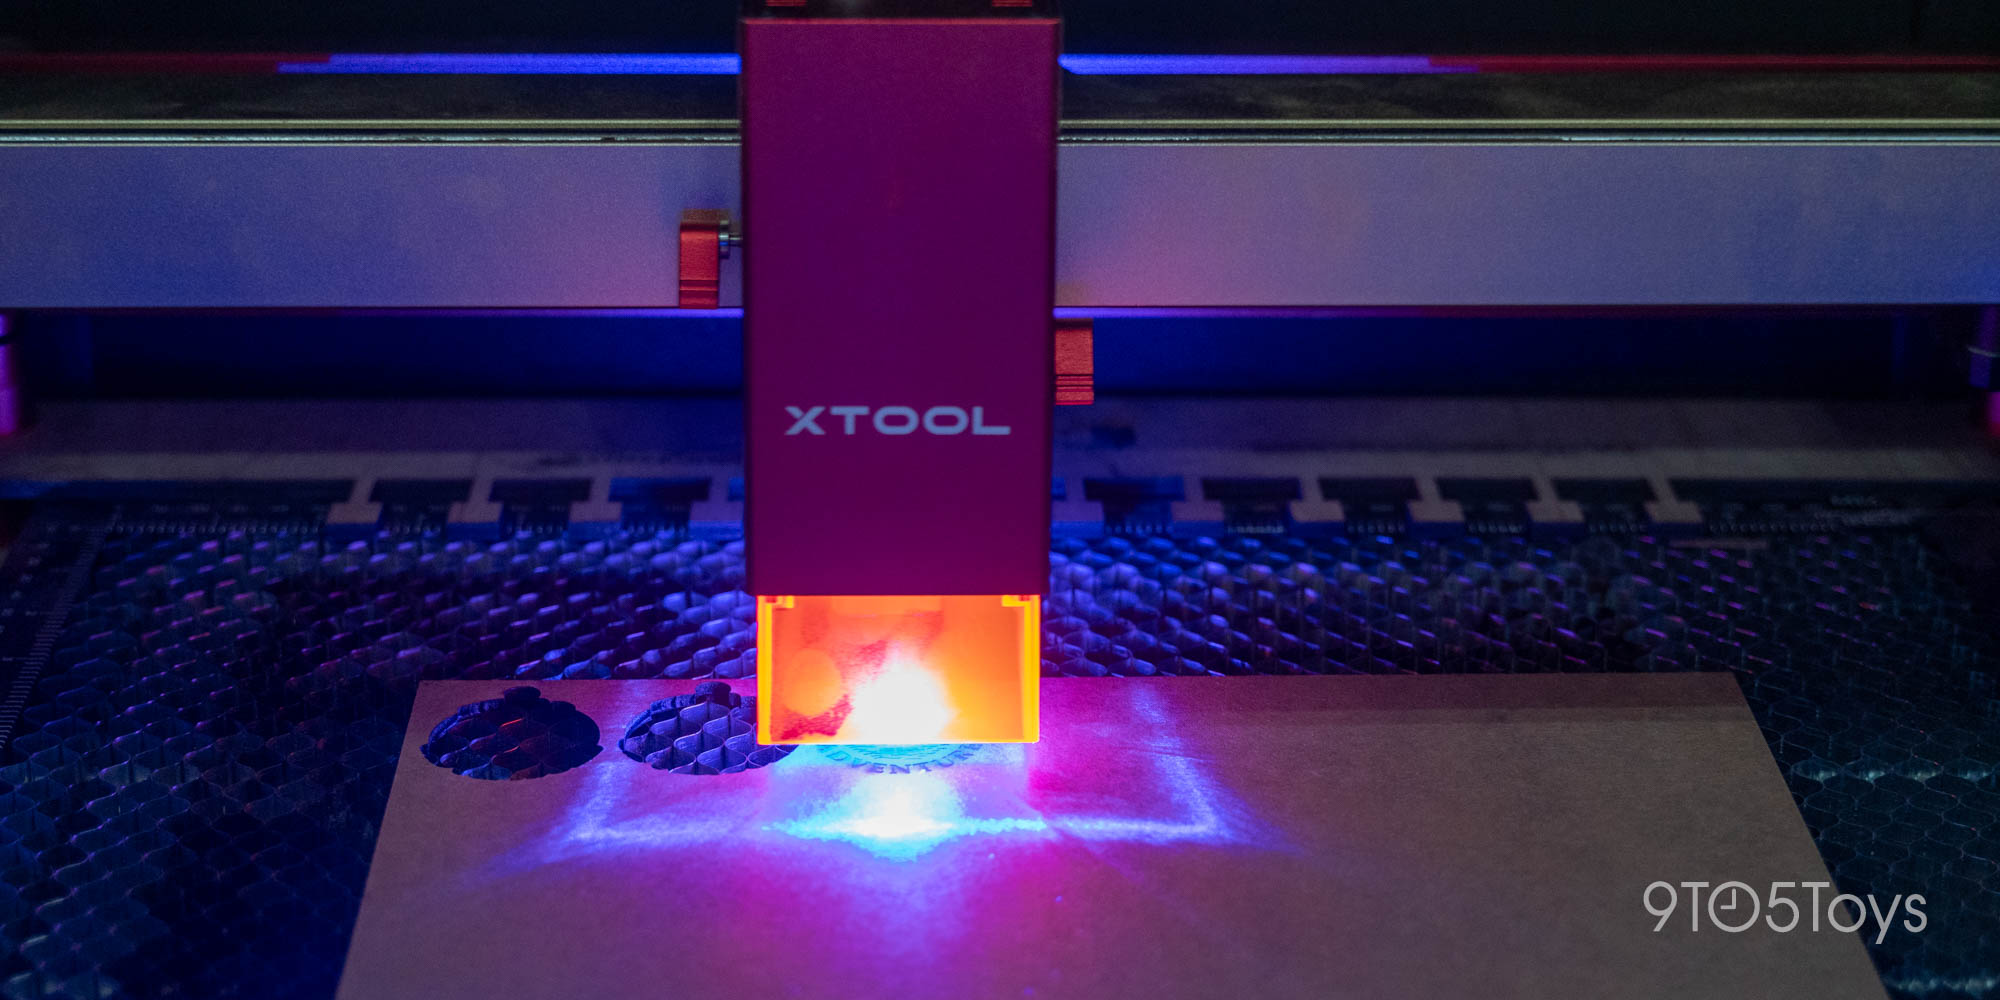 xTool D1 Pro Enclosure Max XTool, Maker/DIY, Educational